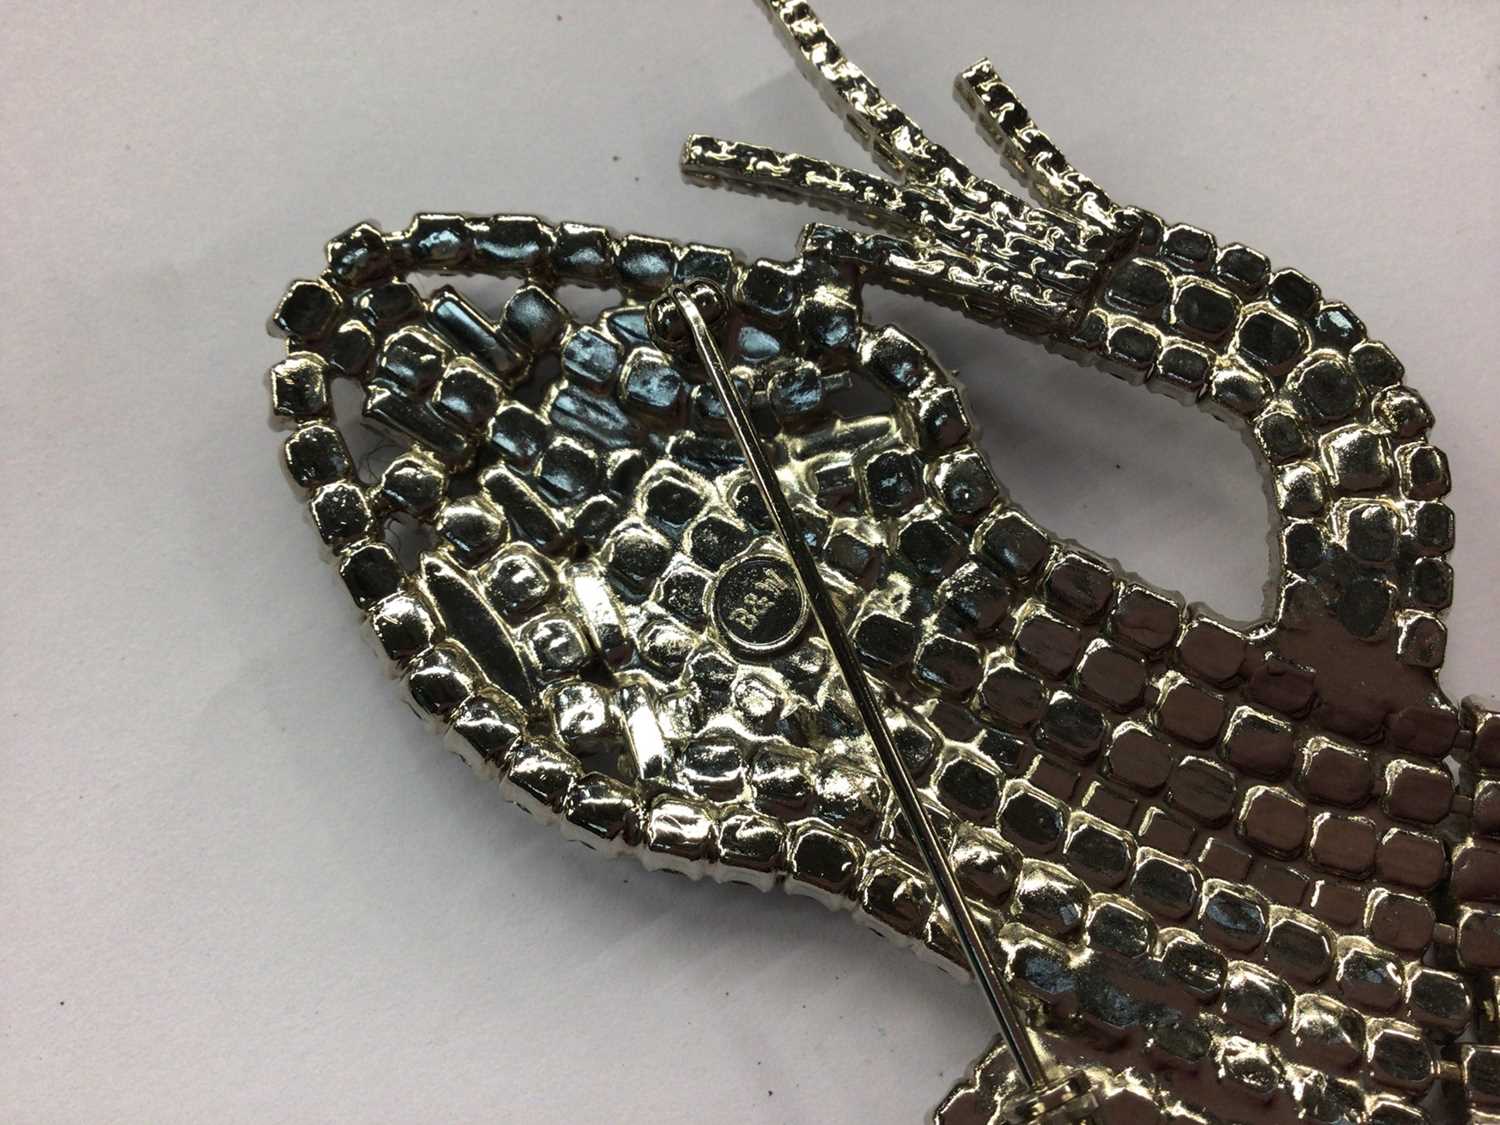 1980s Butler & Wilson paste set lizard brooch and silver Rickshaw brooch (2) - Image 3 of 3